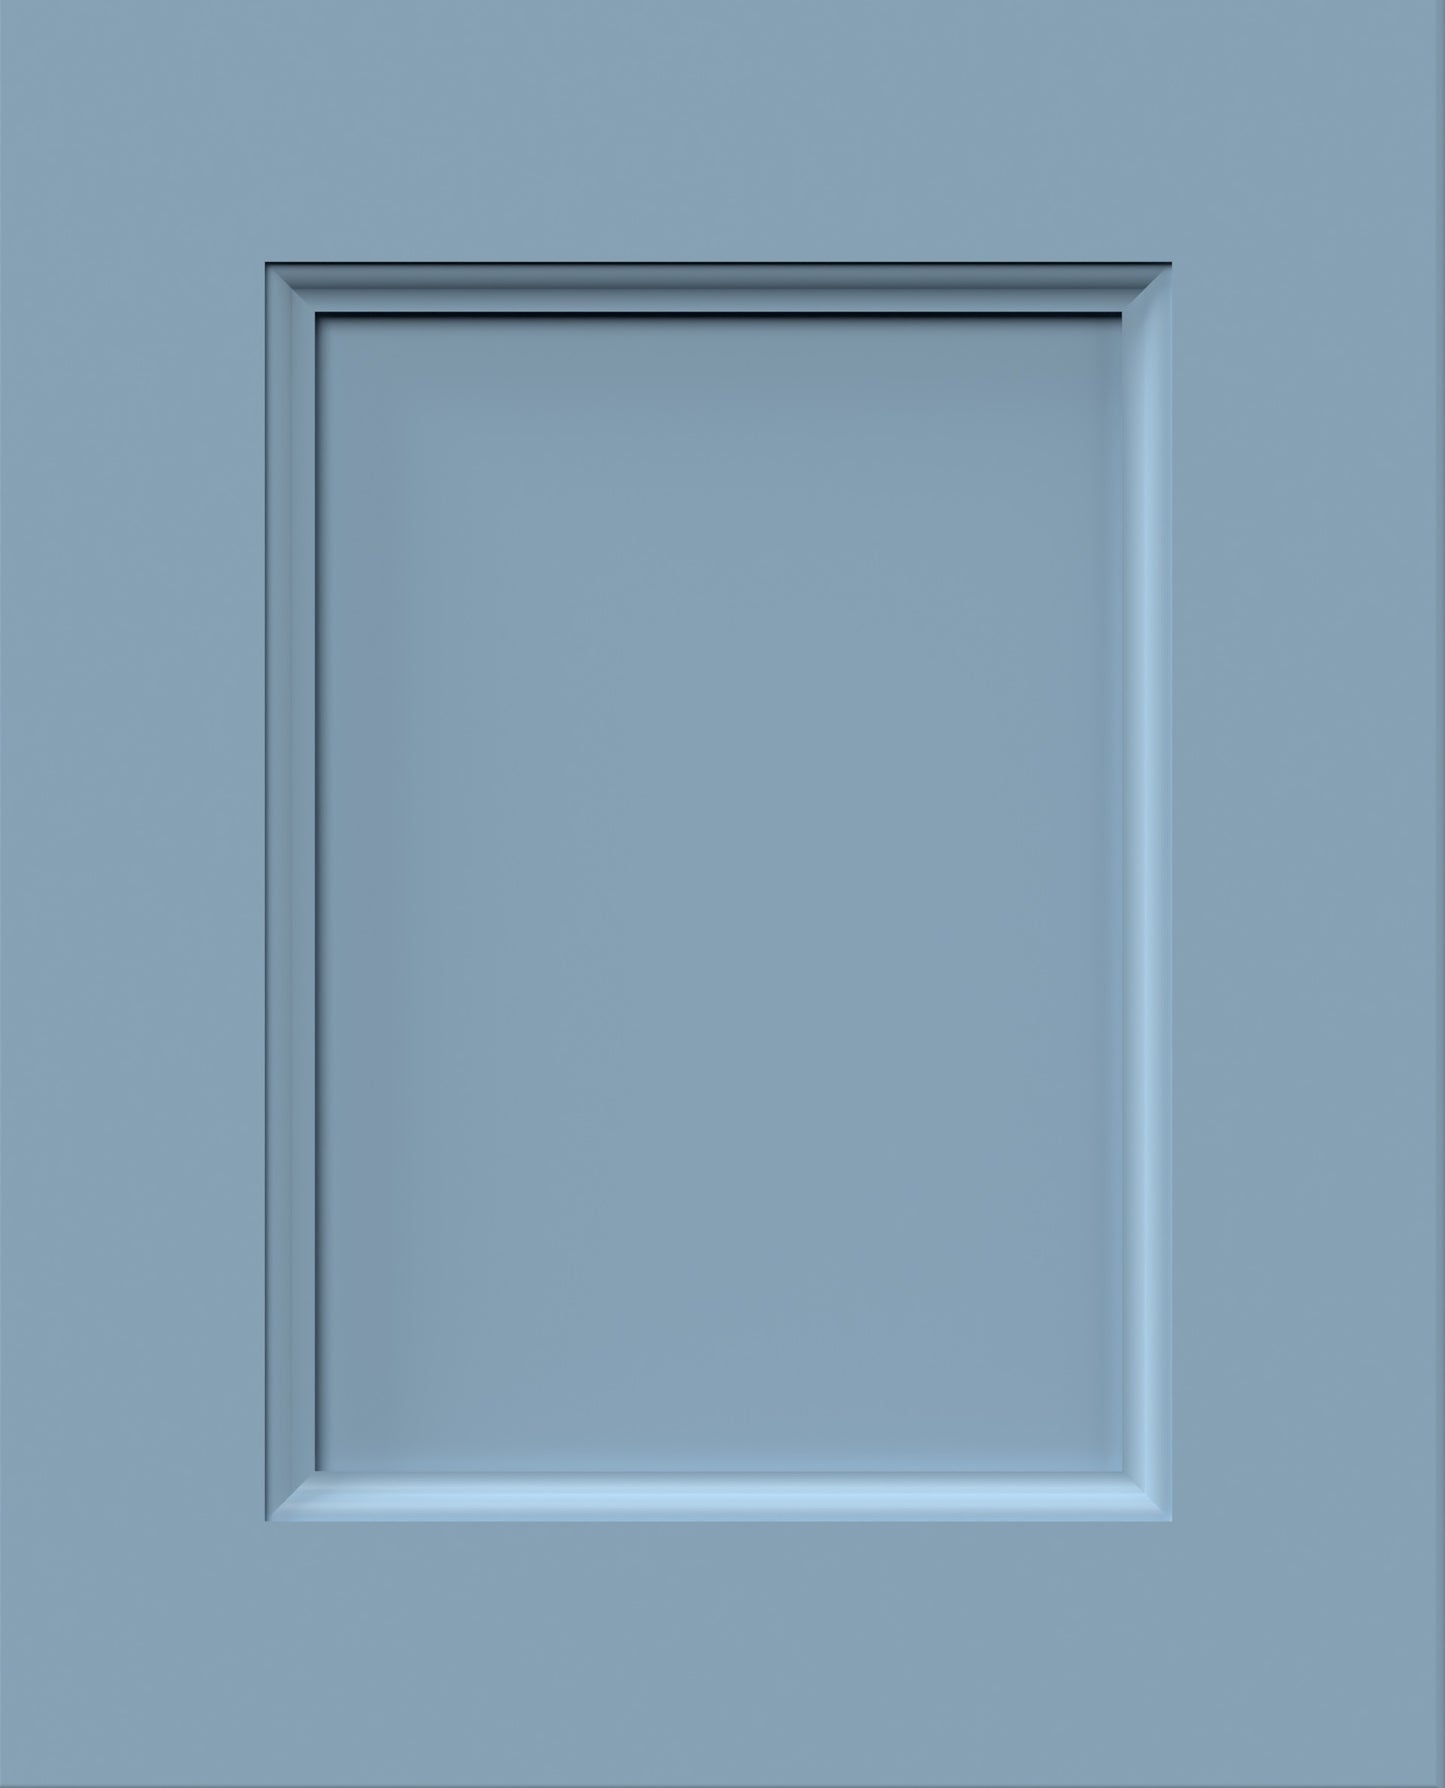 Fabuwood Express Color Sample Door- Small